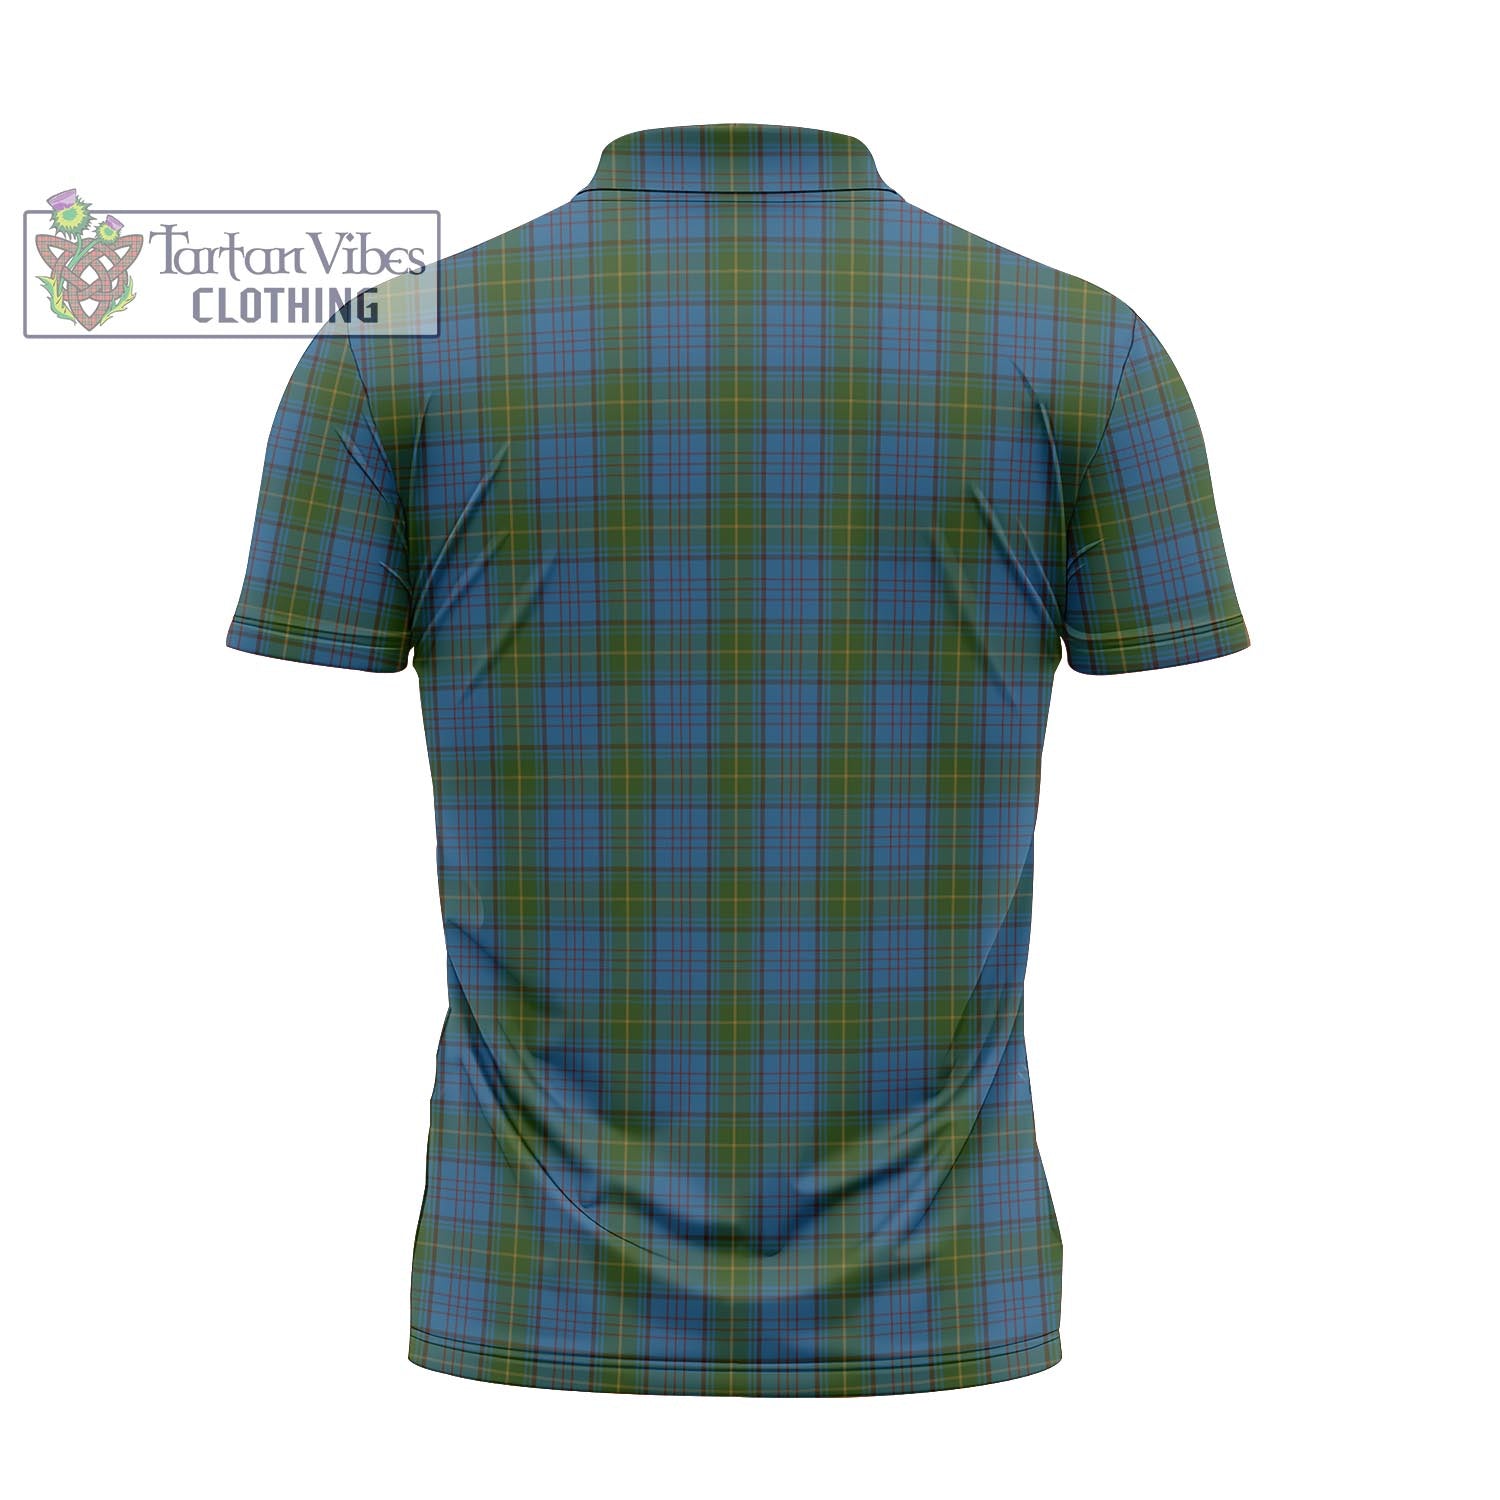 Tartan Vibes Clothing Donegal County Ireland Tartan Zipper Polo Shirt